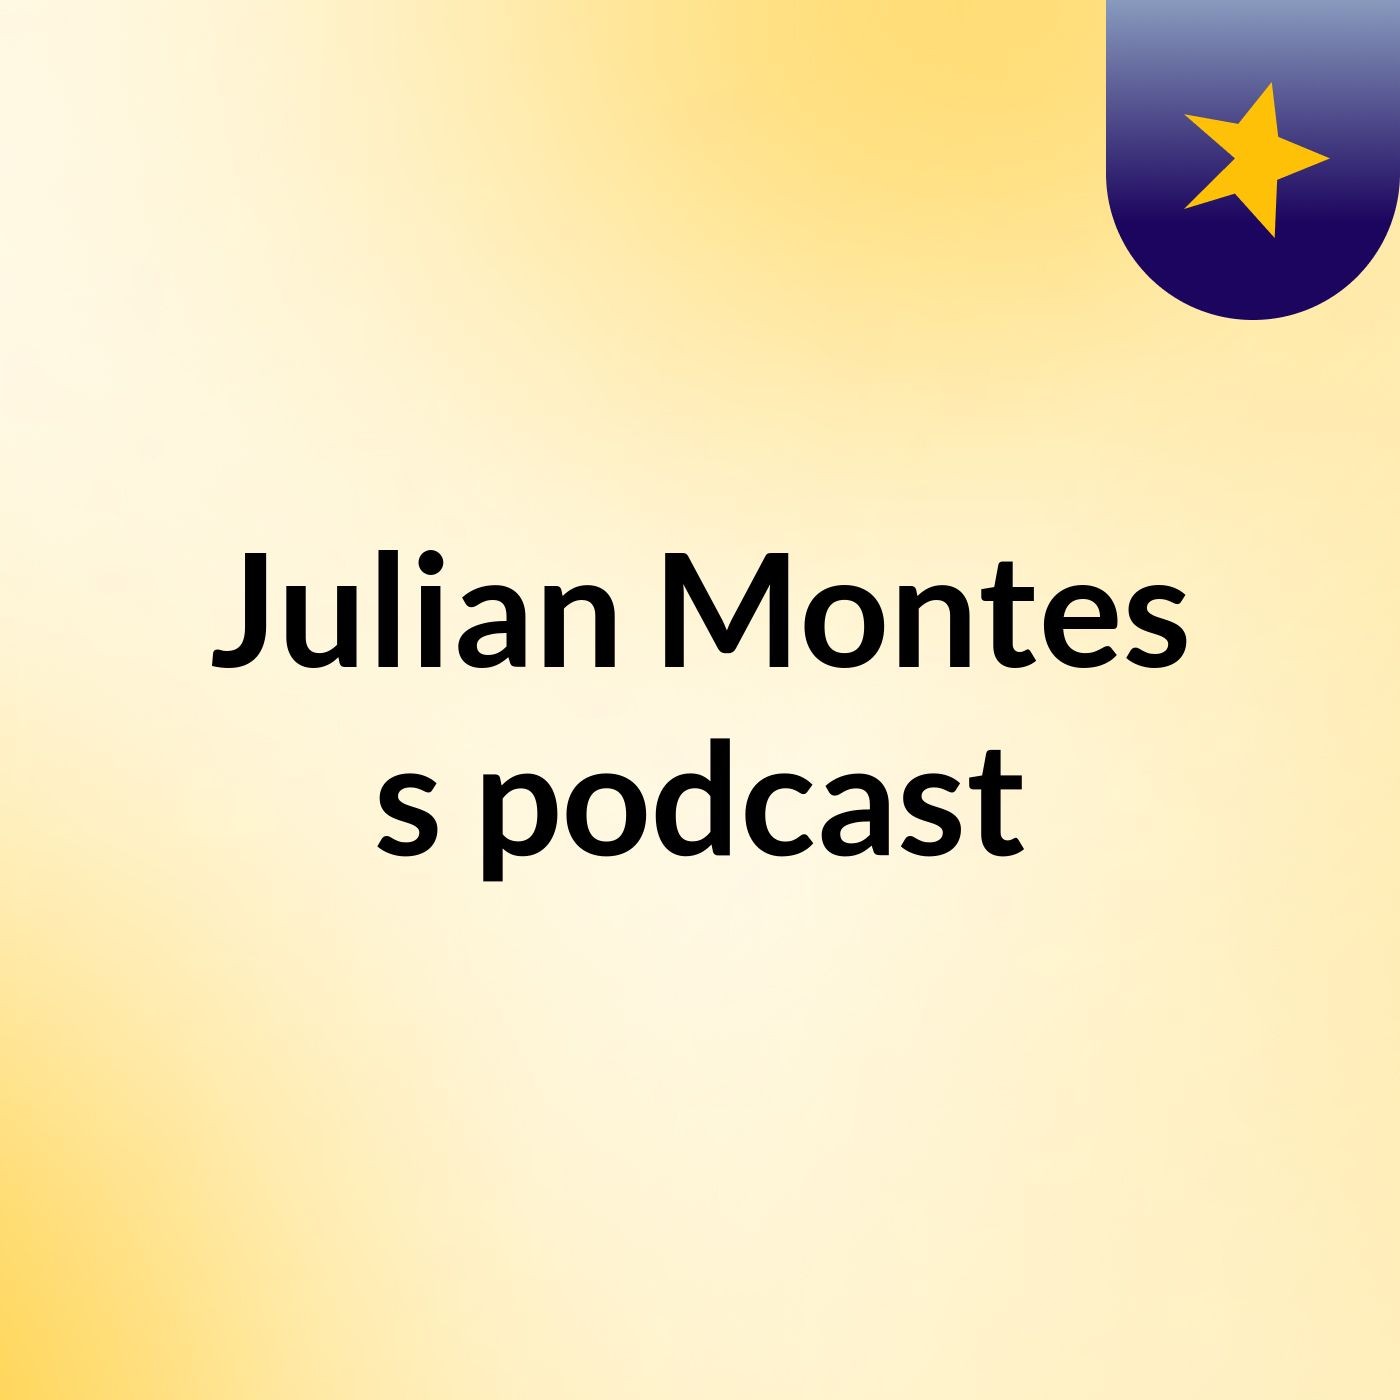 Julian Montes's podcast